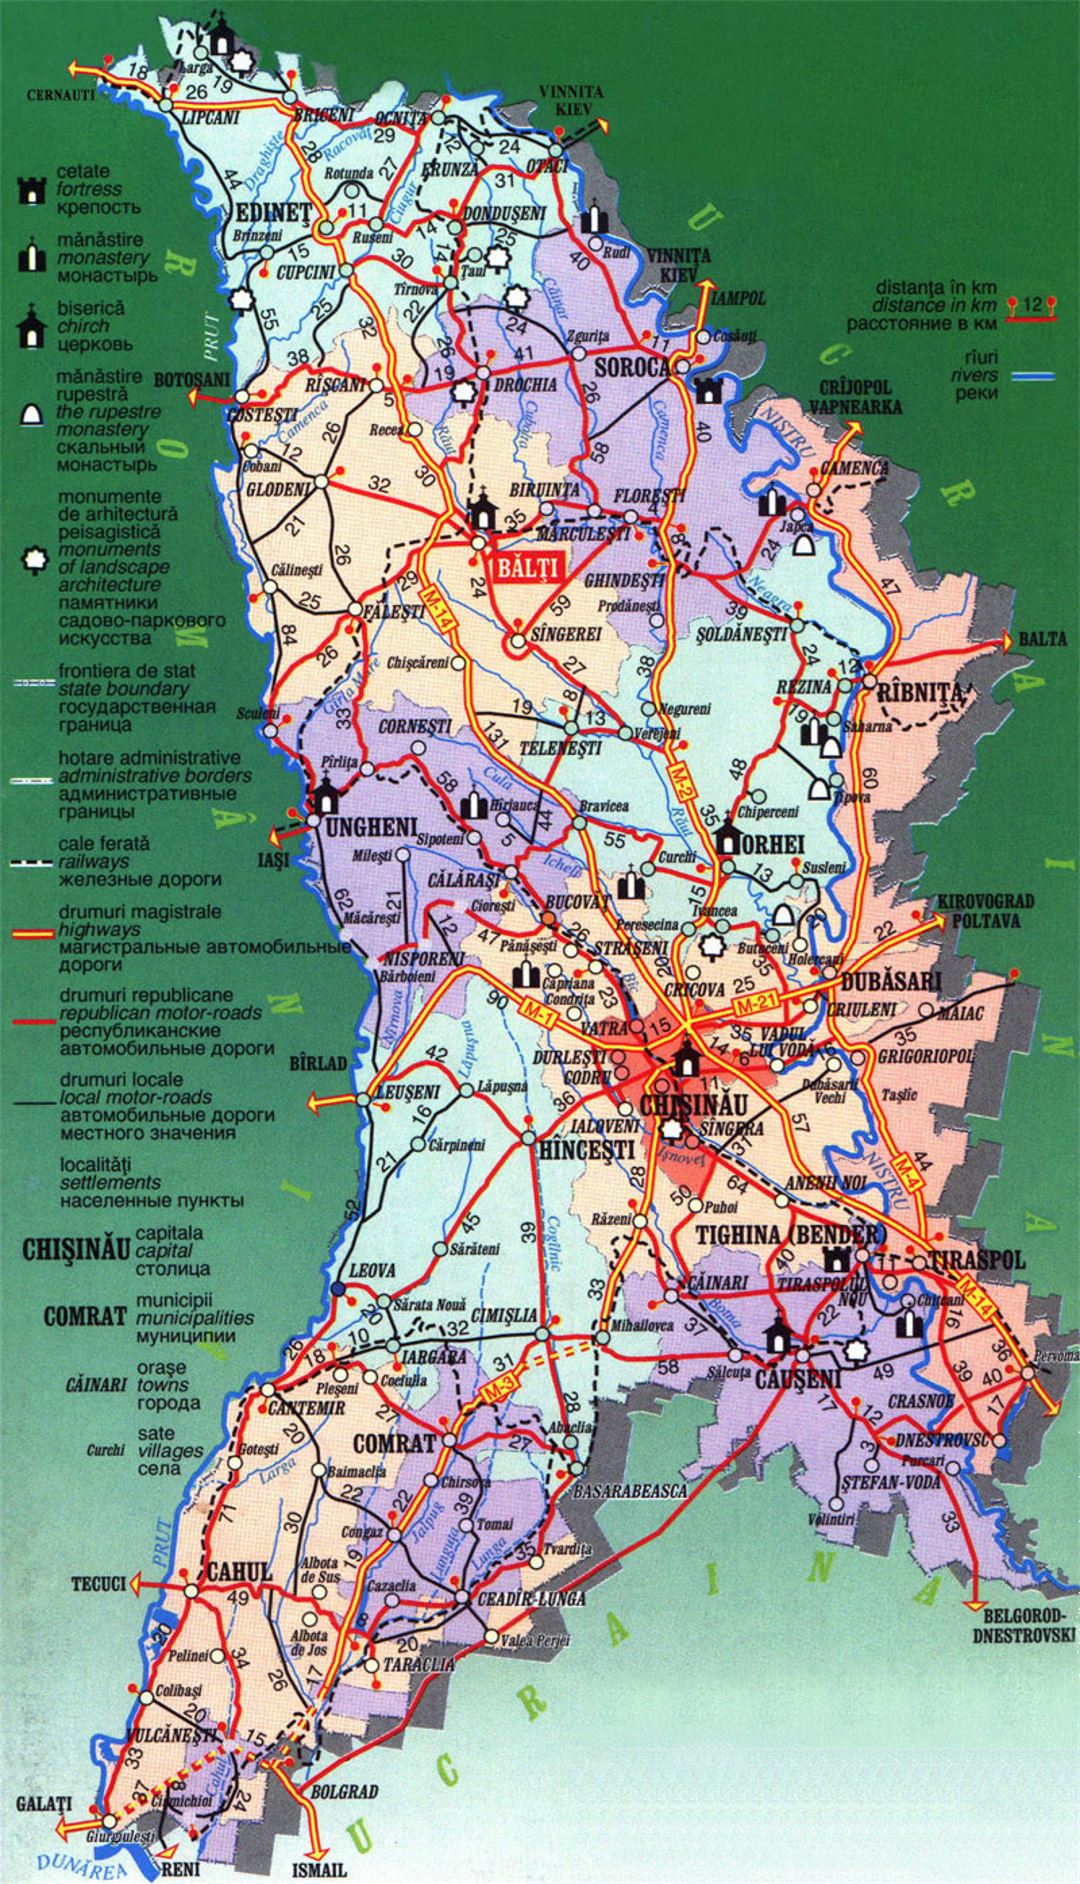 Detailed tourist map of Moldova